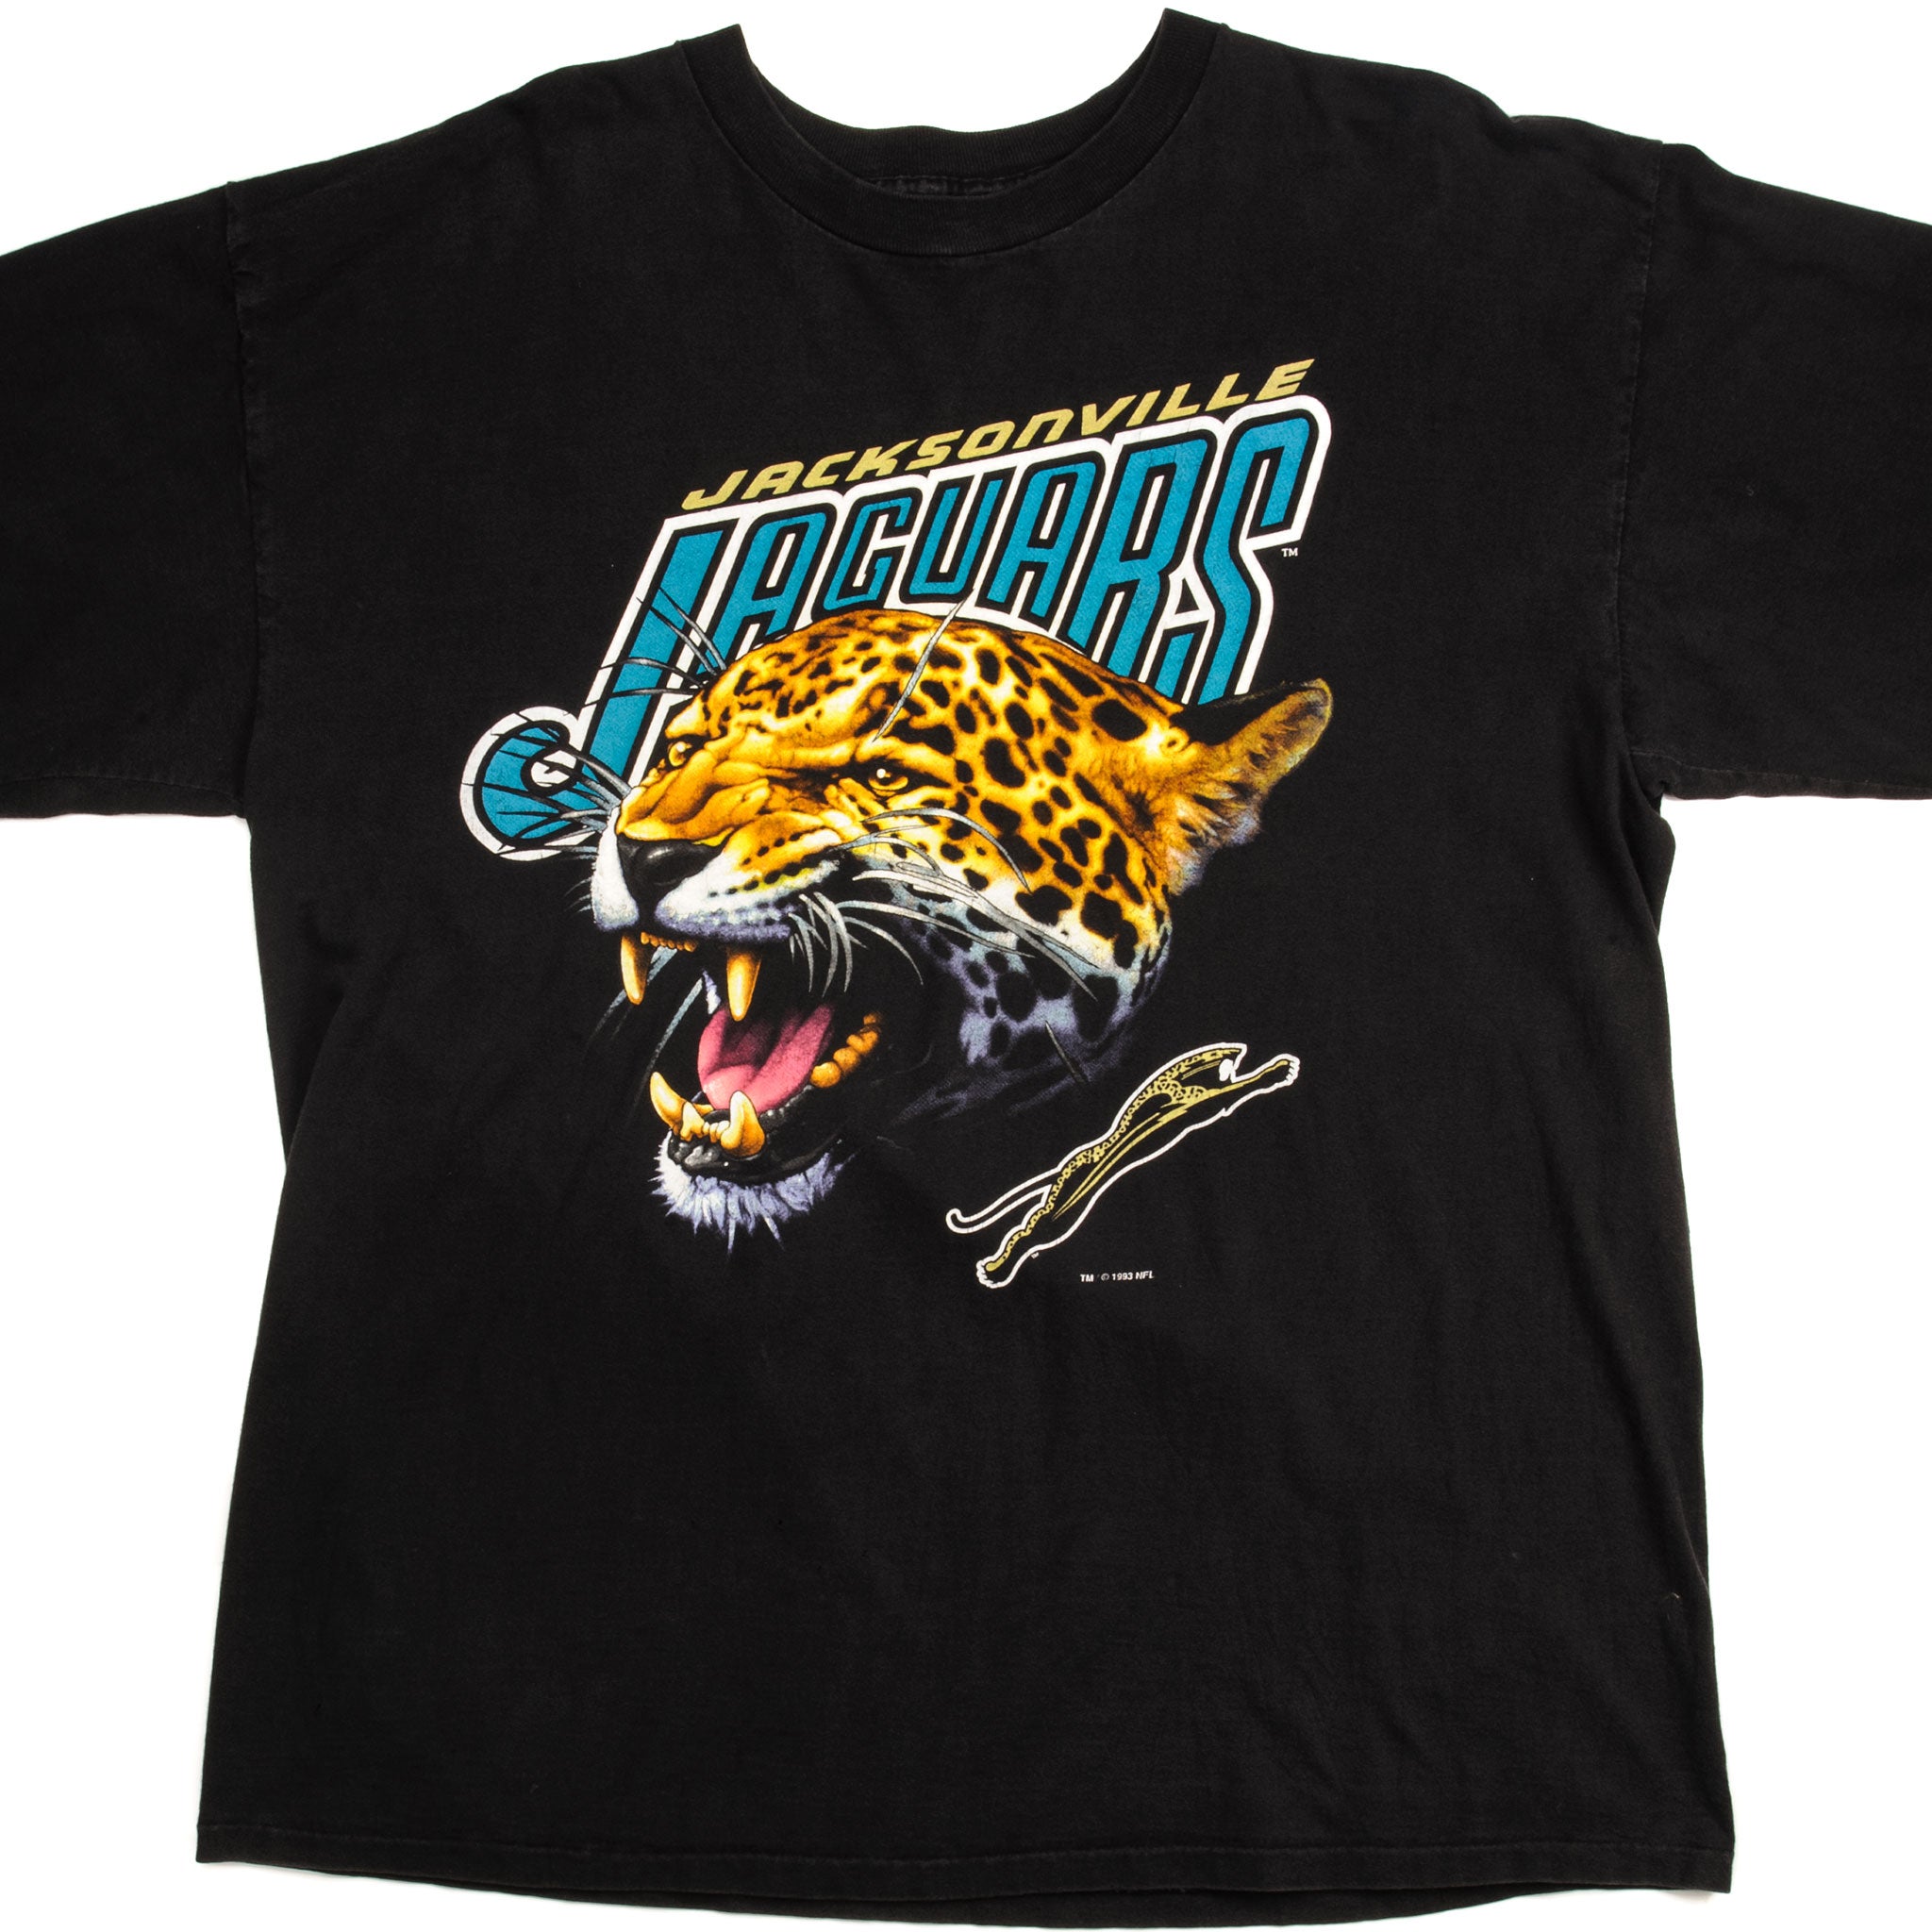 jacksonville jaguars vintage t shirt